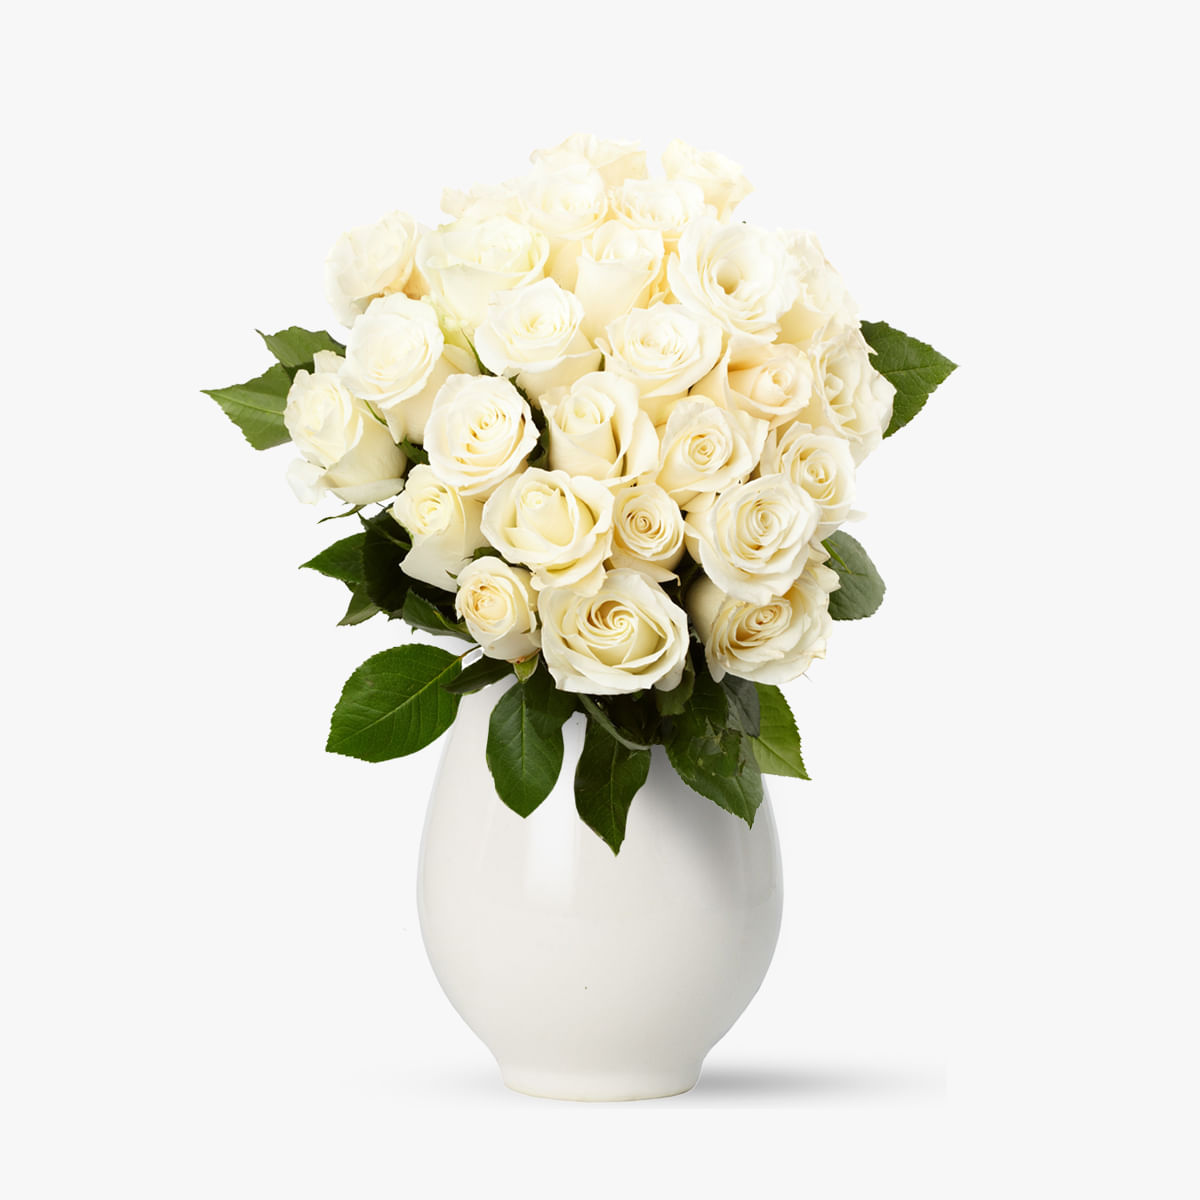 Buchet de 29 trandafiri albi imaculati, simbolizand respect si dragoste